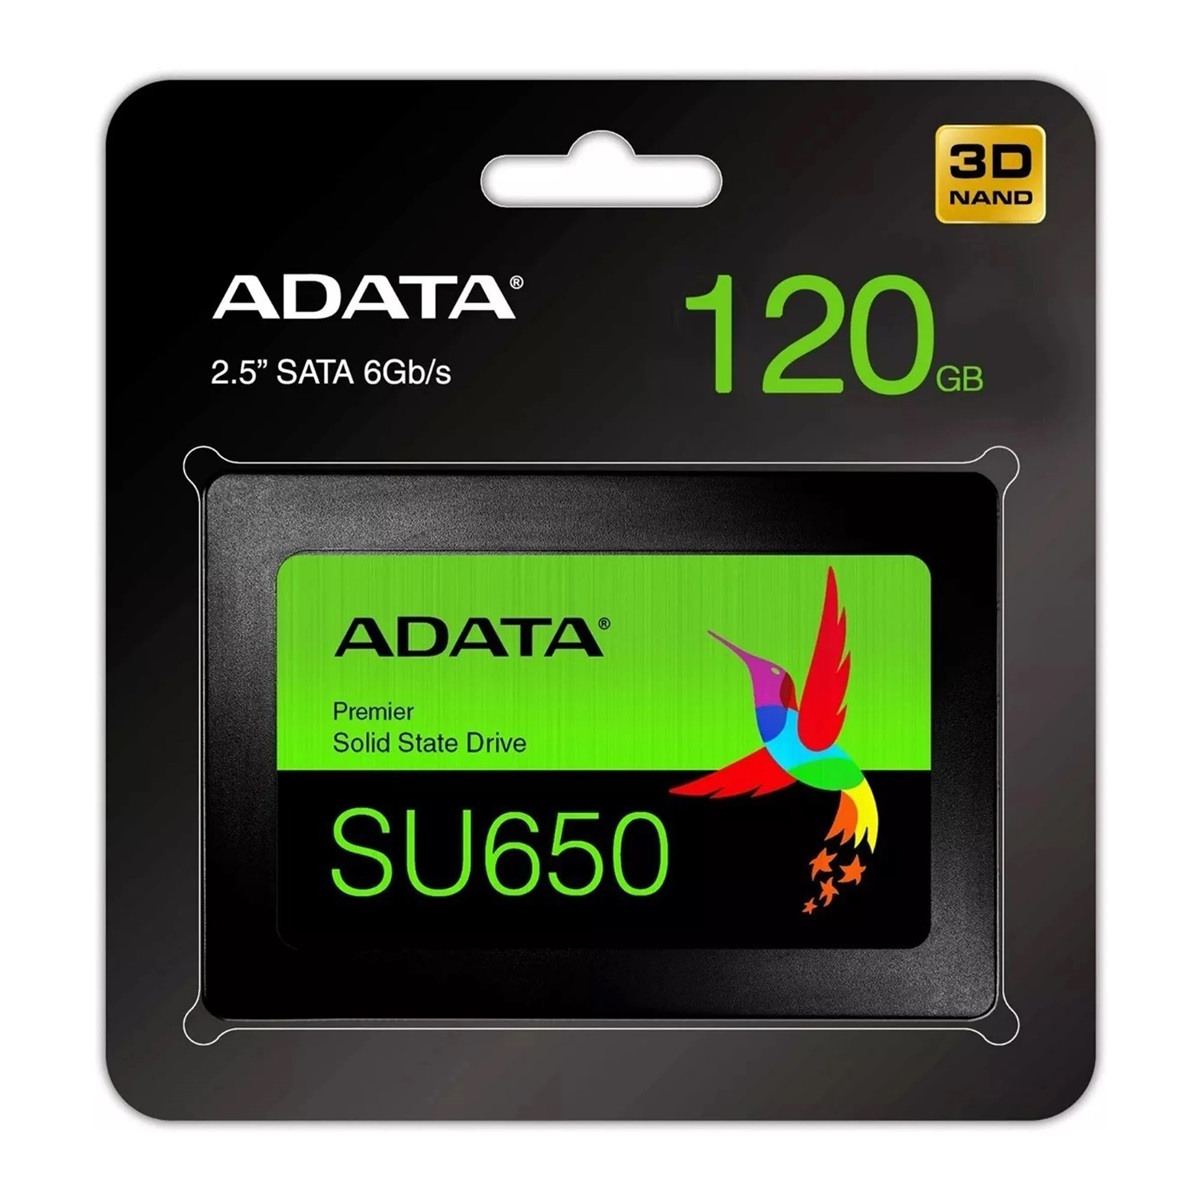 ADATA Ultimate SU650 120GB SATA III Solid State Drive